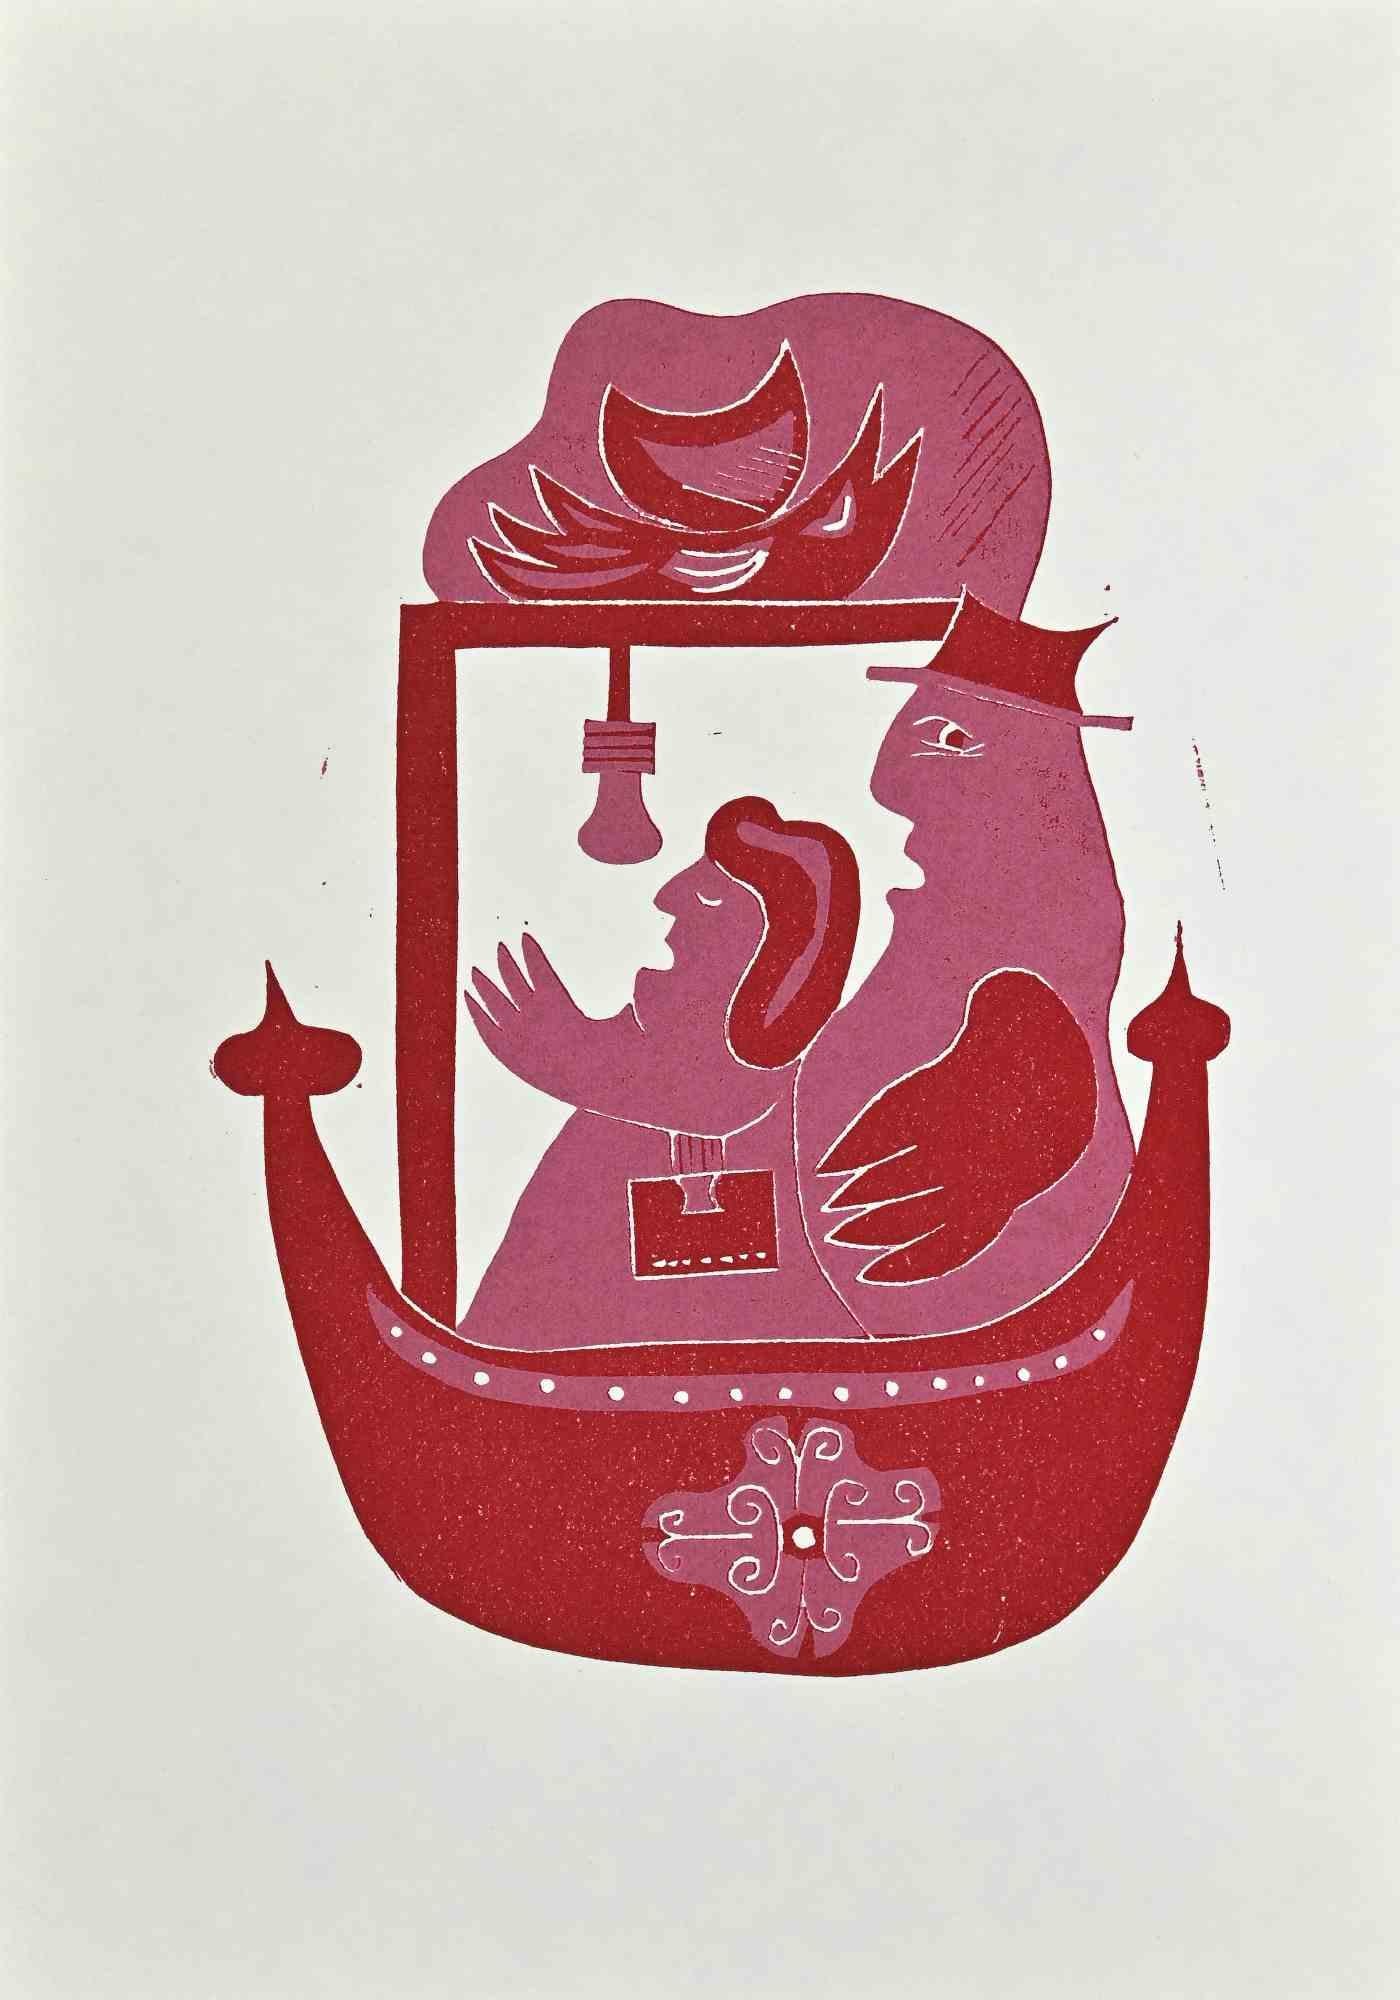 Nobles On Gondola - Screen print by Axel Hartenstein - mid 20th Century